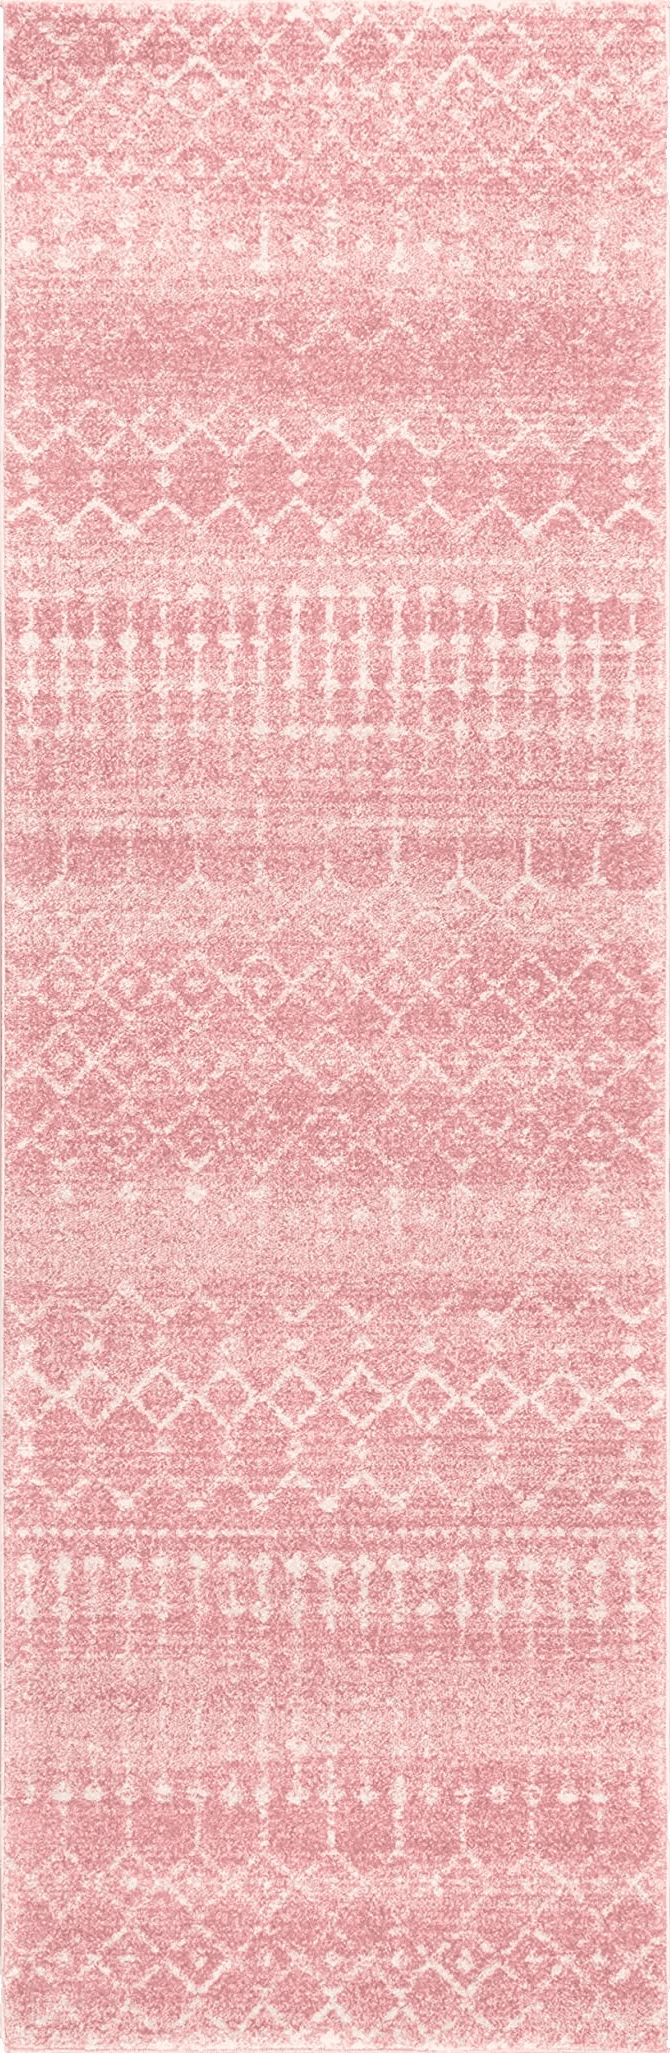 Bohemian Pink nuLOOM Moroccan Blythe Runner Rug, 2' 6" x 6', Pink